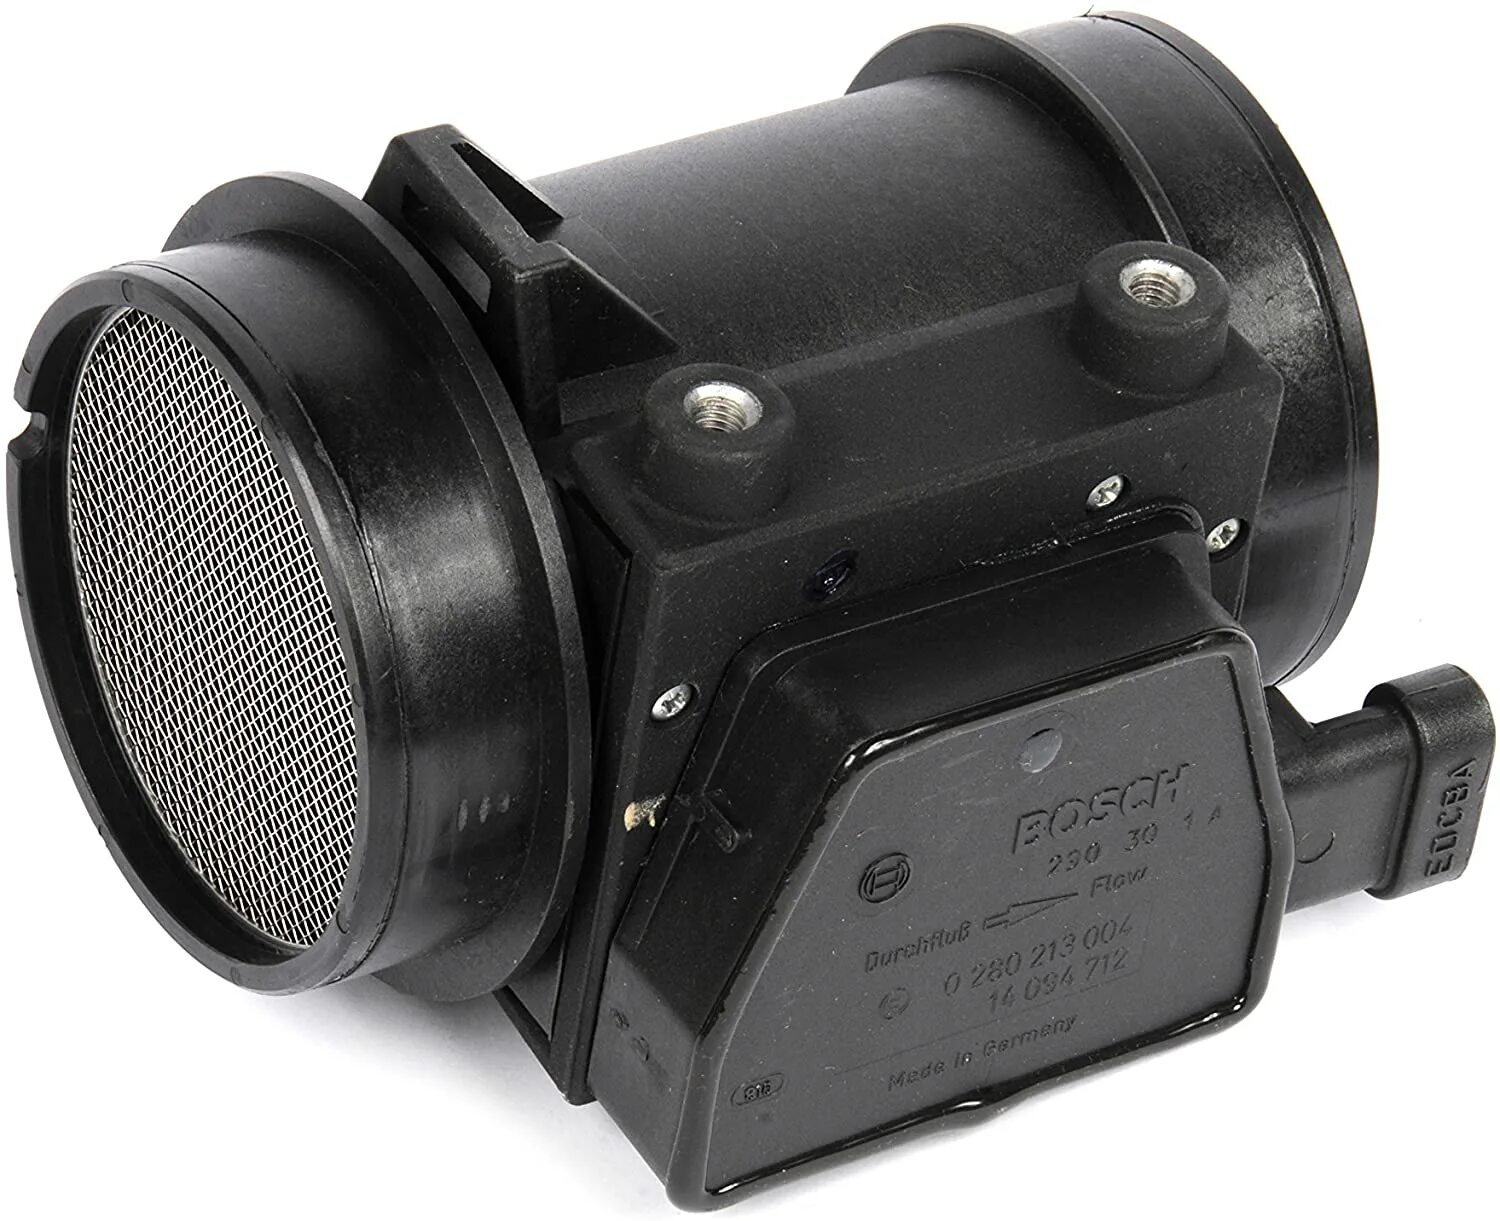 Amc520 Air Flow sensor. Airflow(ACDELCO #213-352). MAF датчик. Ultrasonic Air Flow sensor.